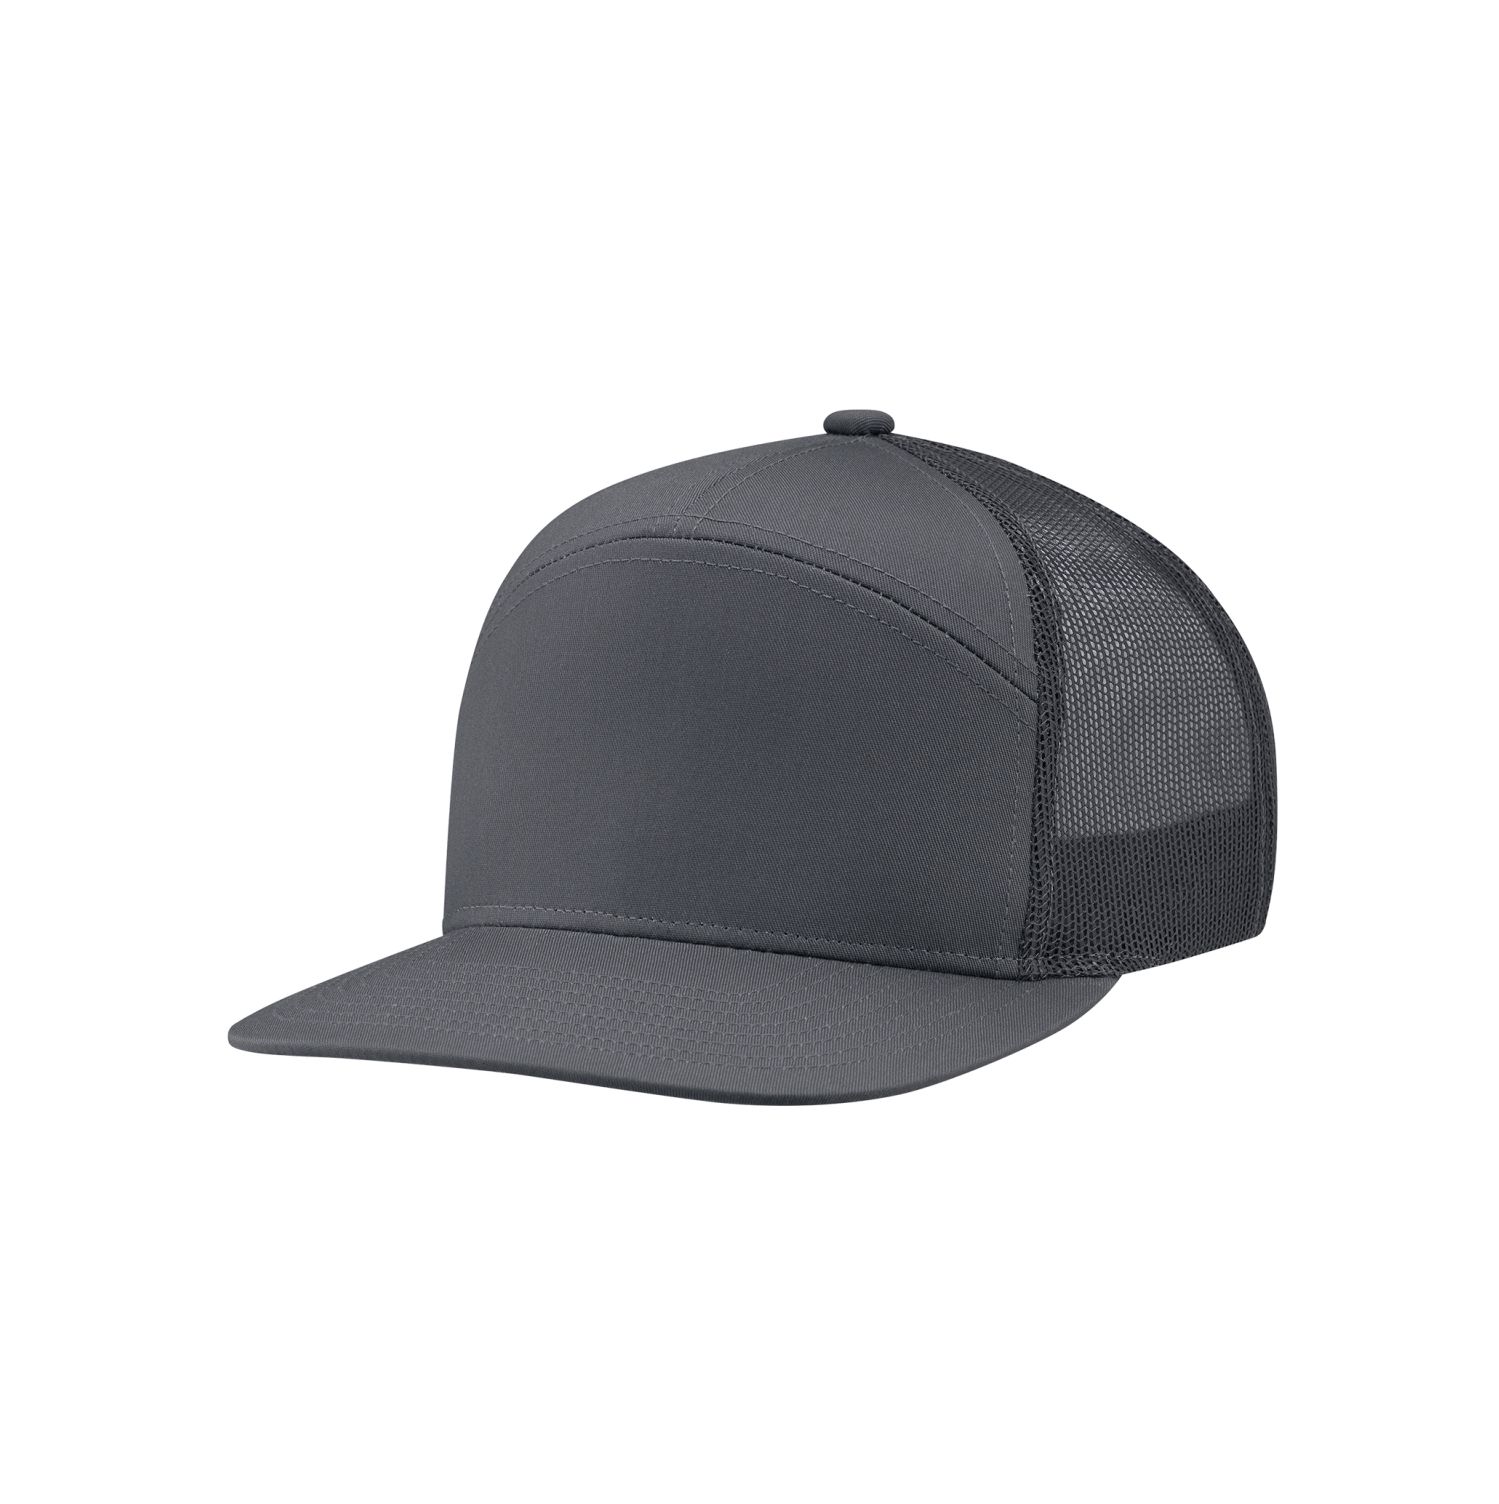 AJM Polycotton / Nylon Mesh 7 Panel Constructed Camper Style Hat (Mesh Back) #3D410M Charcoal